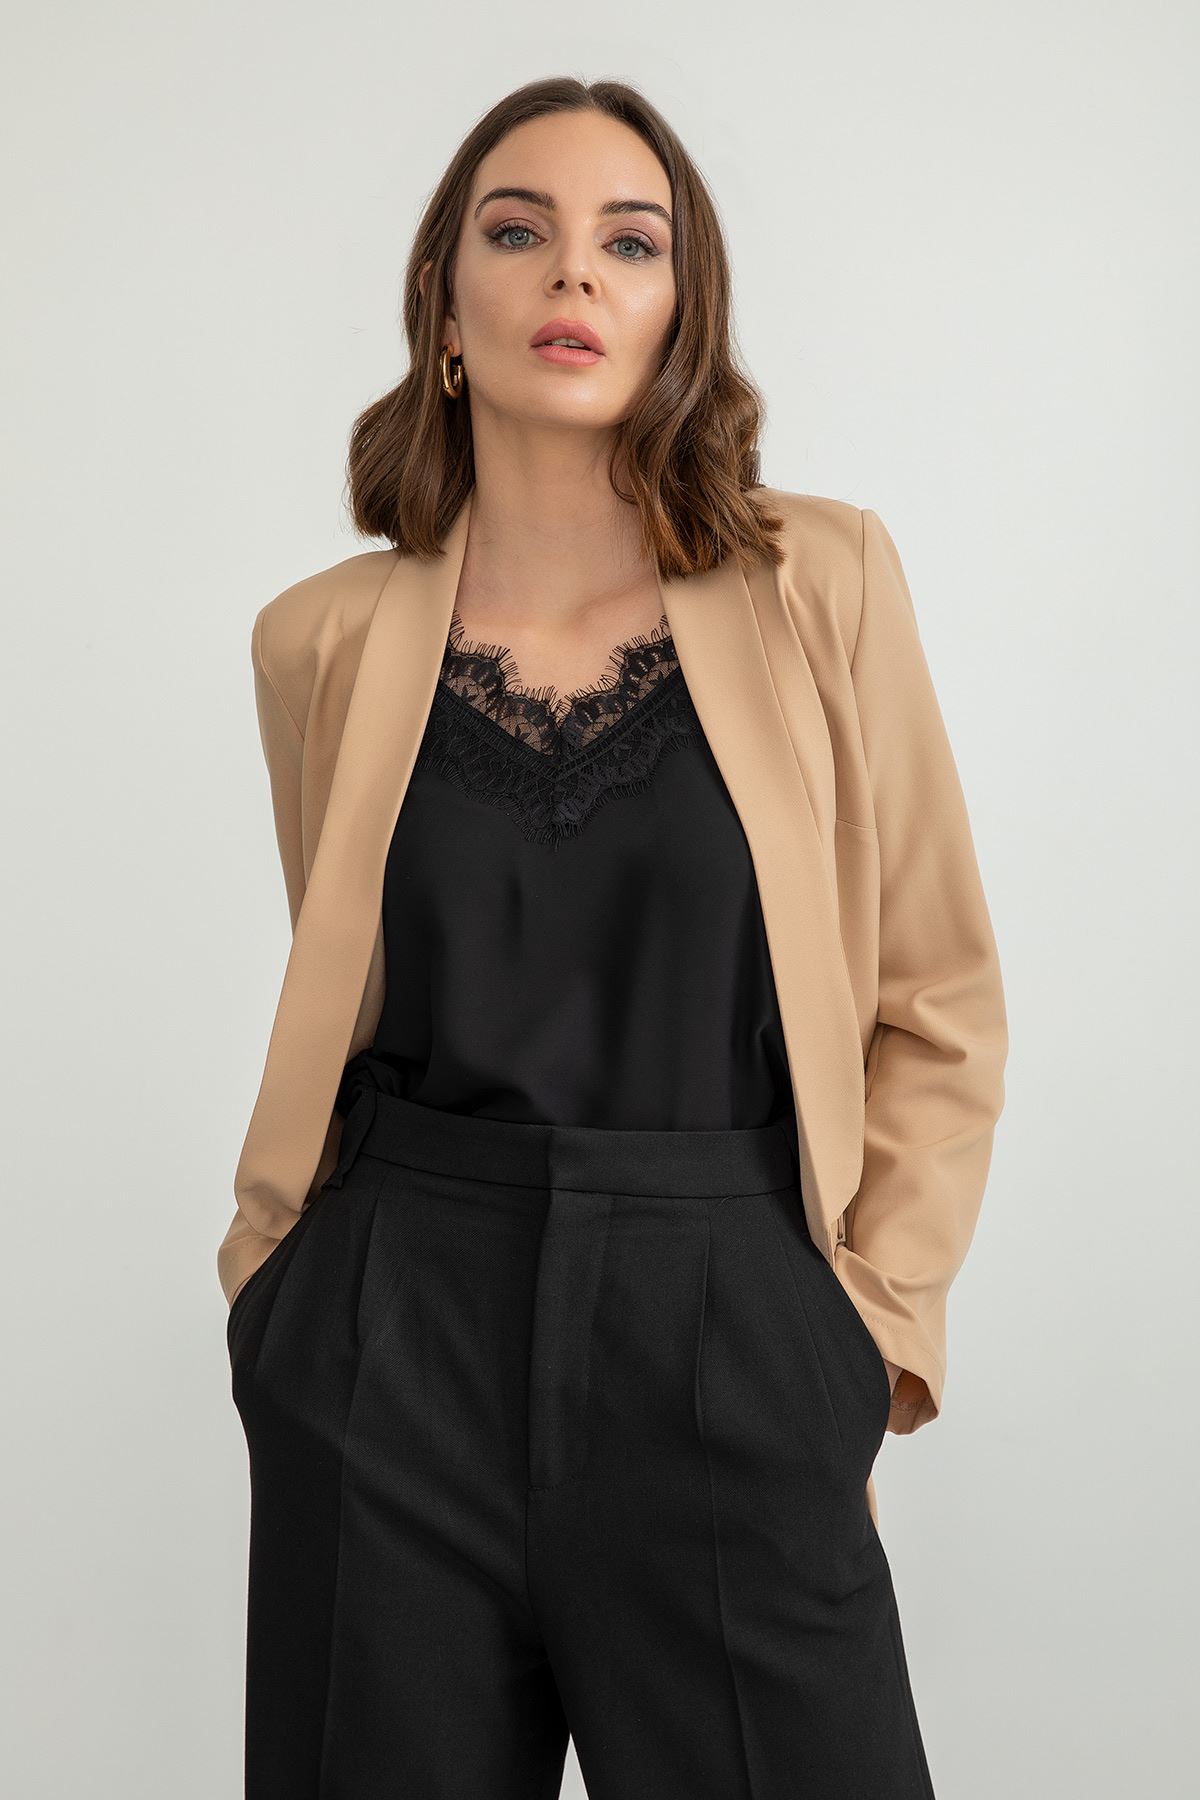 Polyester Fabric Shawl Collar Hip Height Classical Blazer Women Jacket - Stone